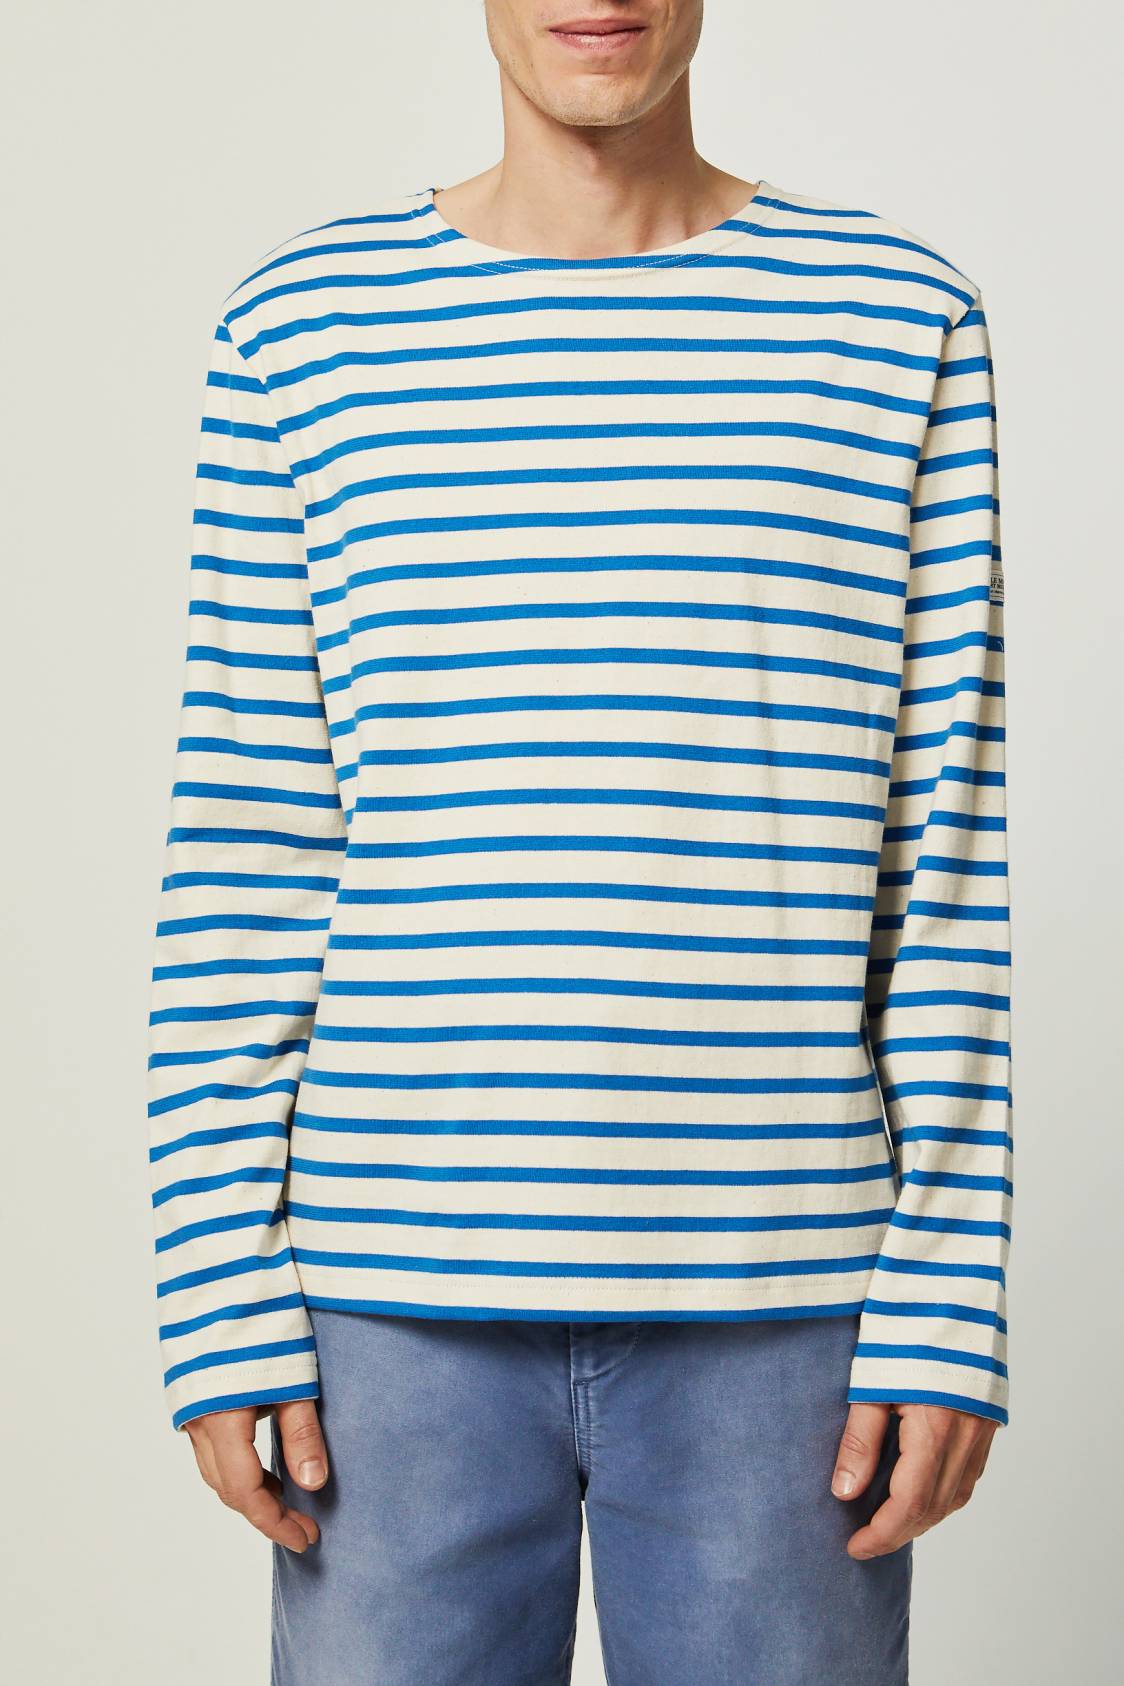 Thurin Breton-Striped T-Shirt - LE MONT SAINT MICHEL